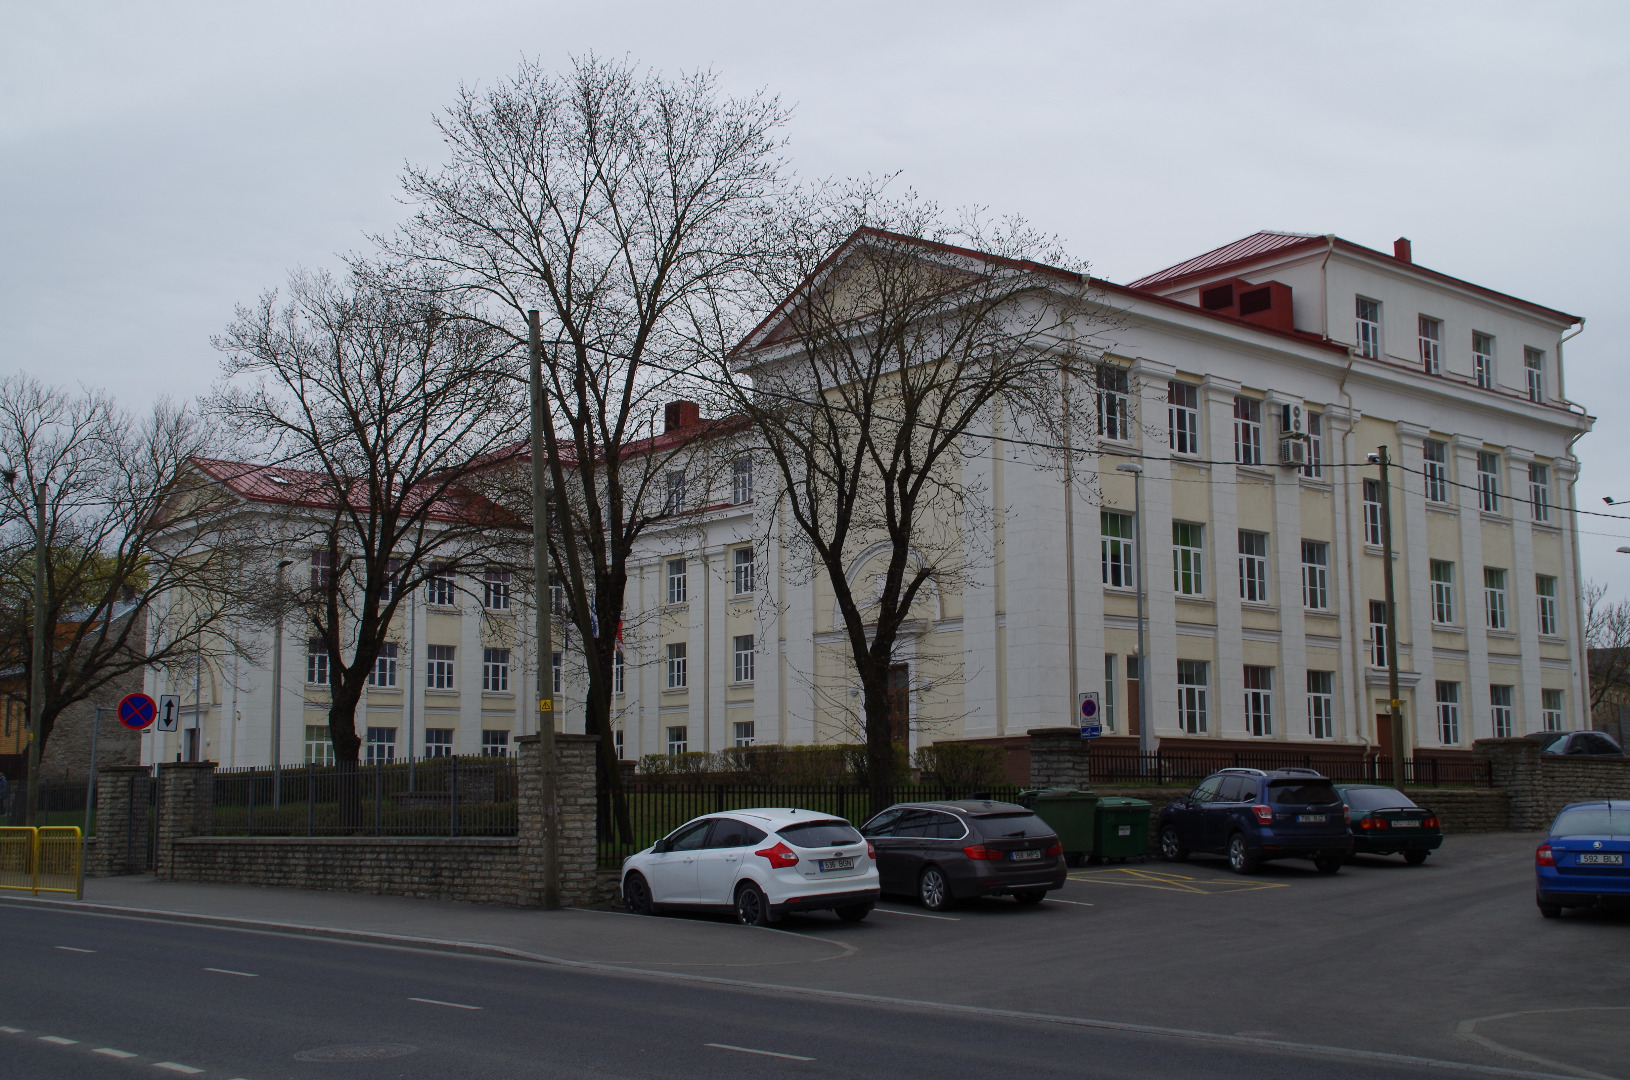 Tallinn, V. Kingissepa Street 68, 23rd high school building. rephoto